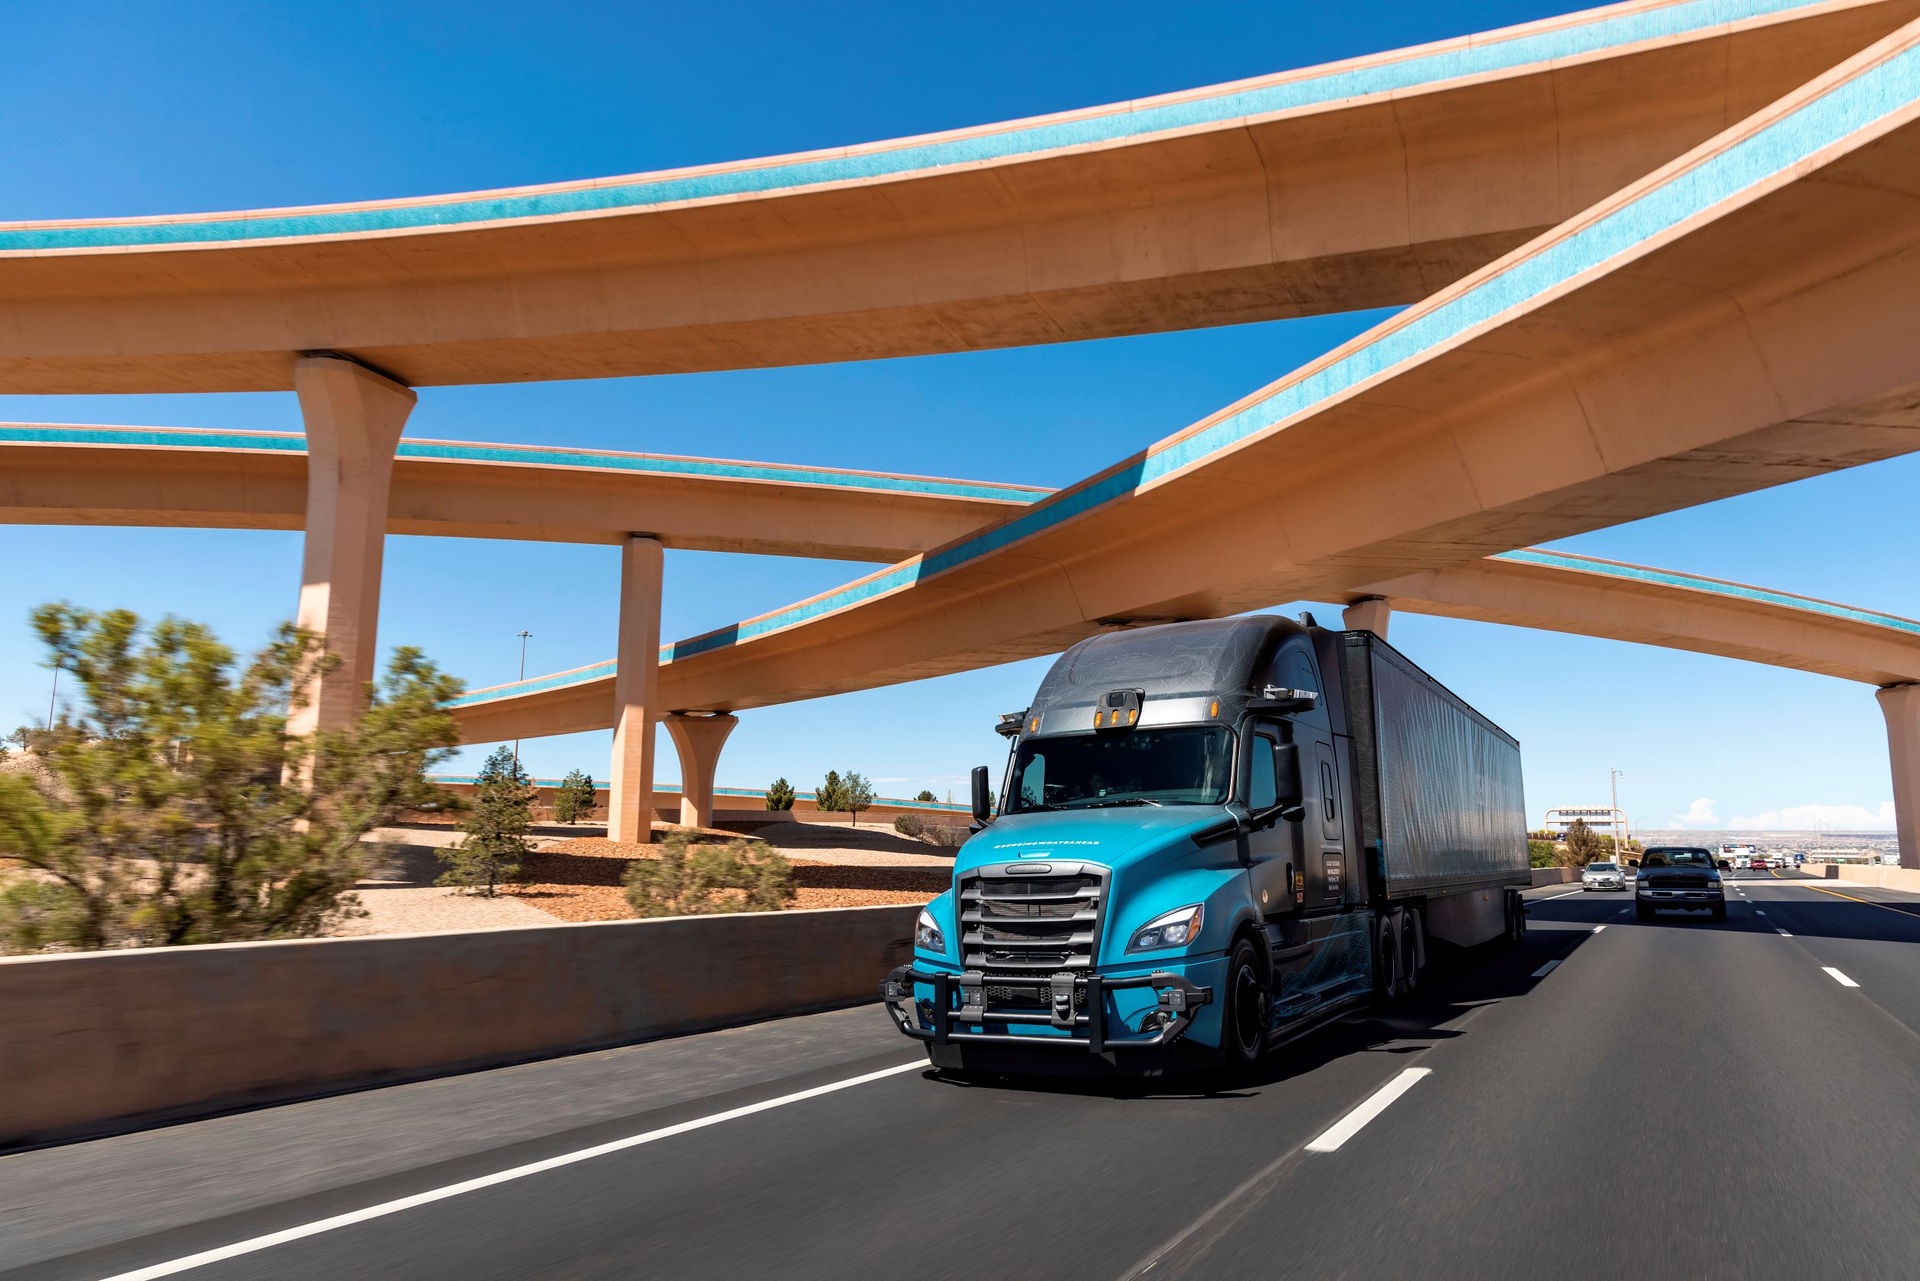 Daimler Truck’s independent subsidiary Torc Robotics collaborates with leading logistics companies on autonomous trucking